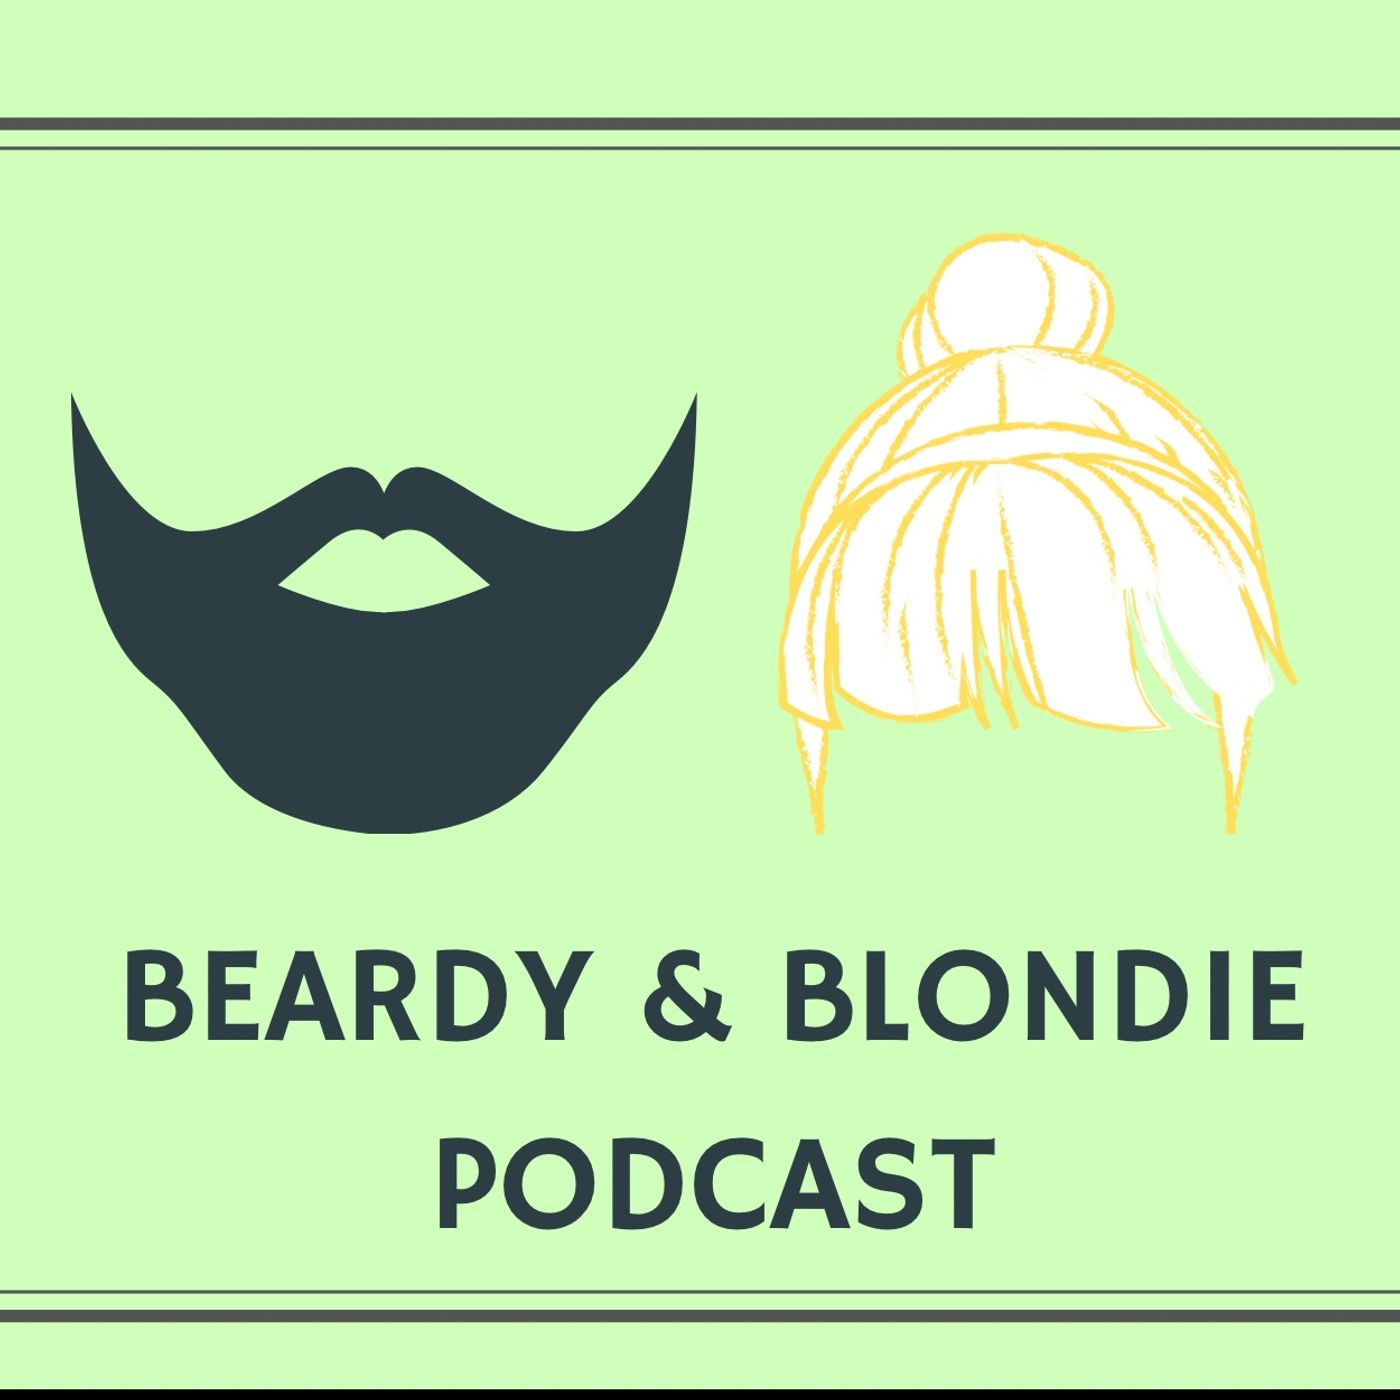 Beardy & Blondie